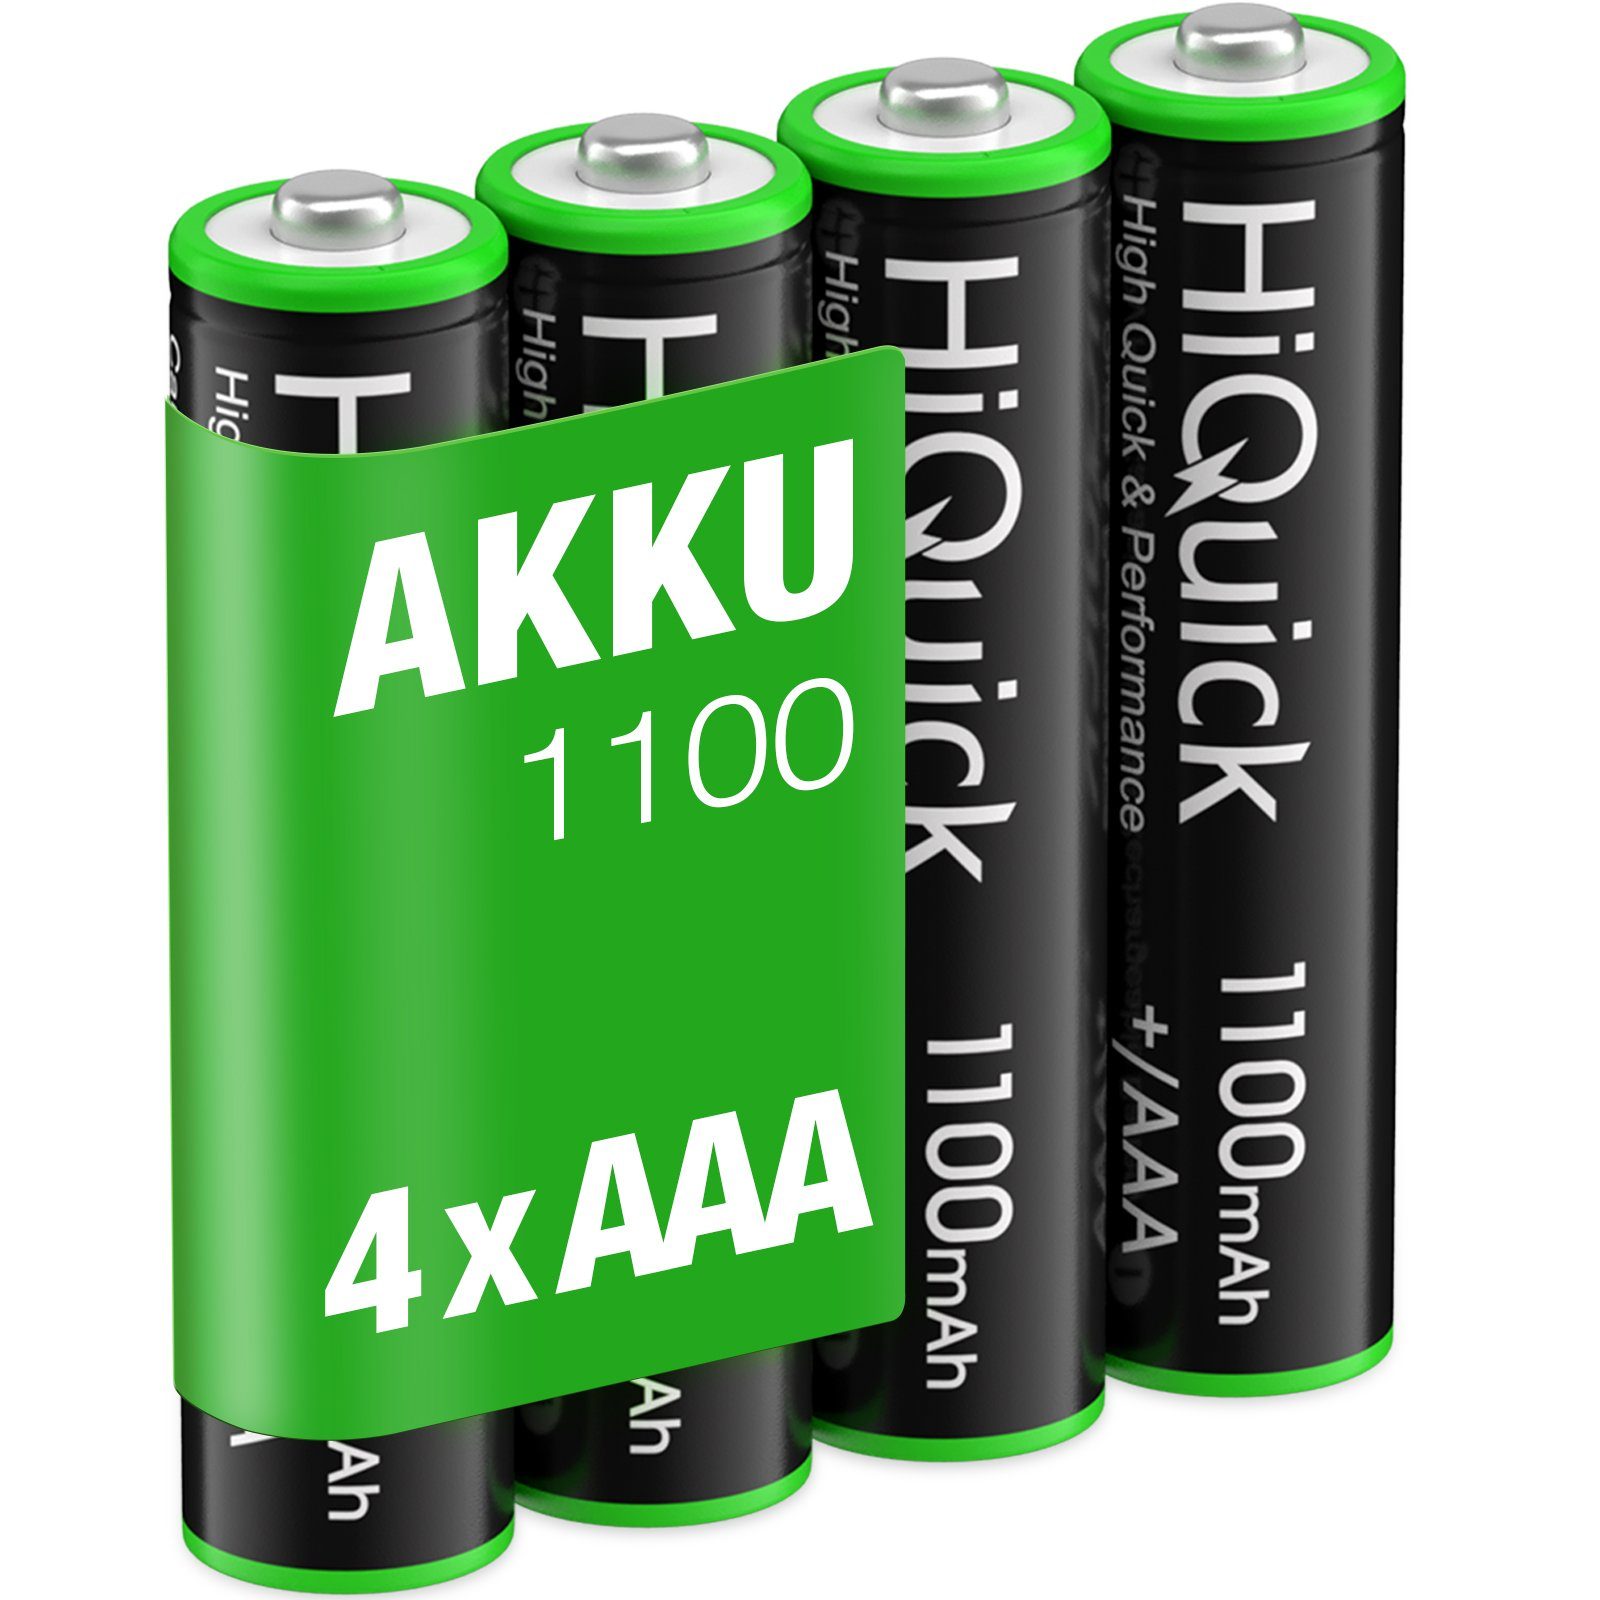 Akku 1110mAh Stück wiederaufladbar HiQuick NiMH 4 AAA Mignon V) 1100 Akku 1,2V-Batterien mAh (1.2